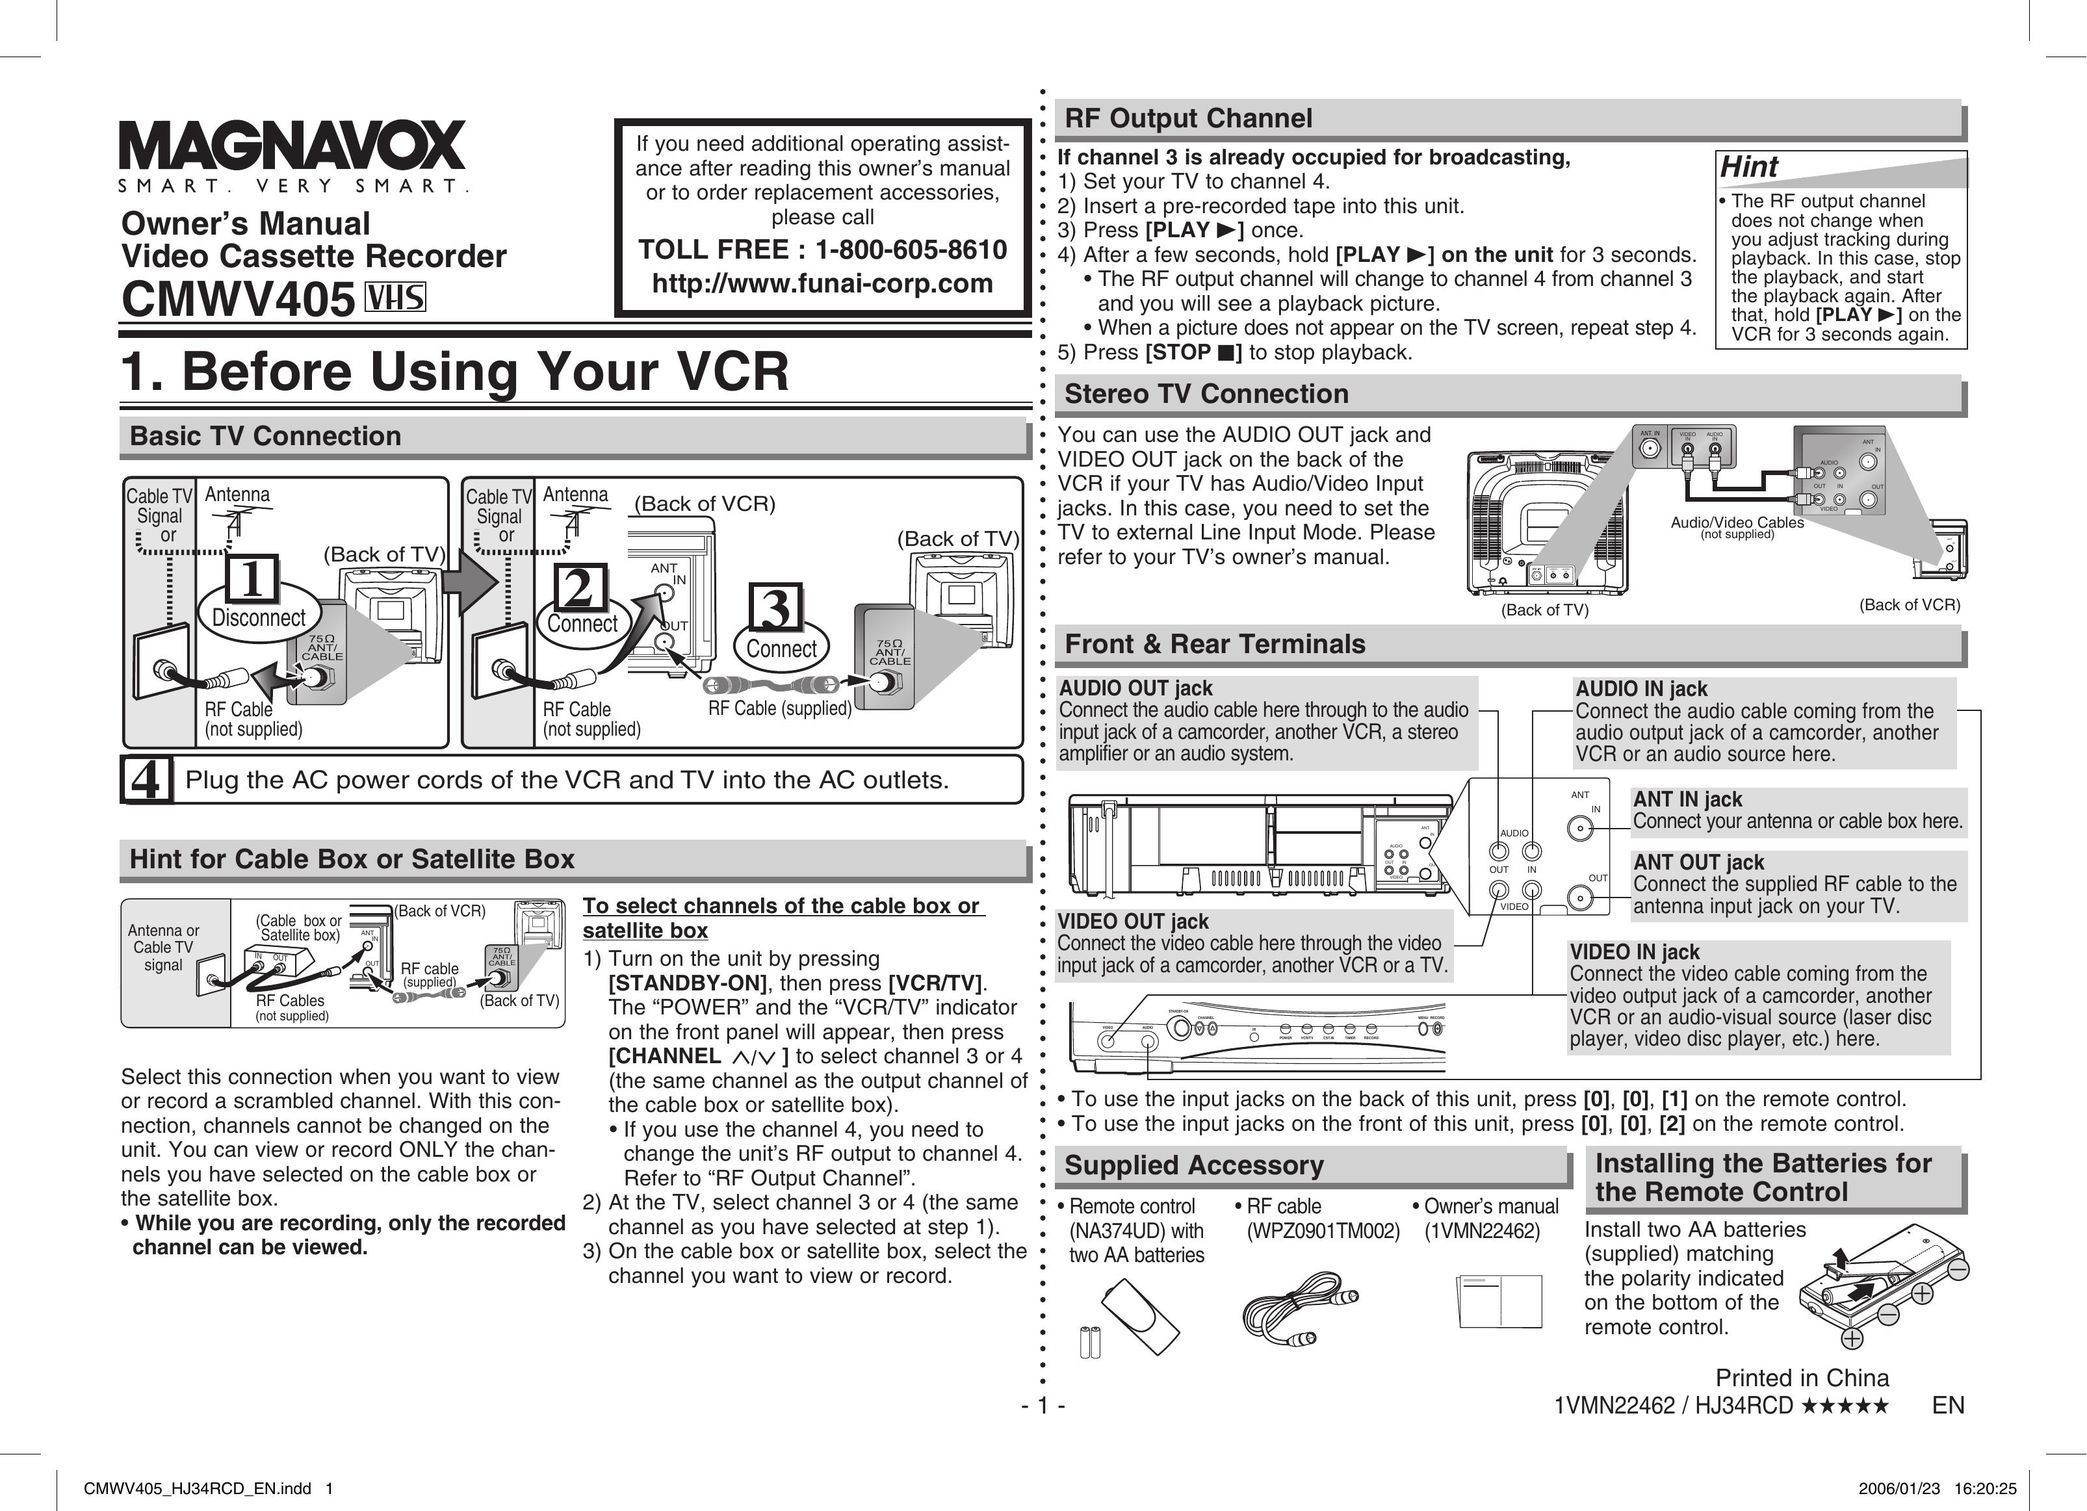 Magnavox CMWV405 VCR User Manual